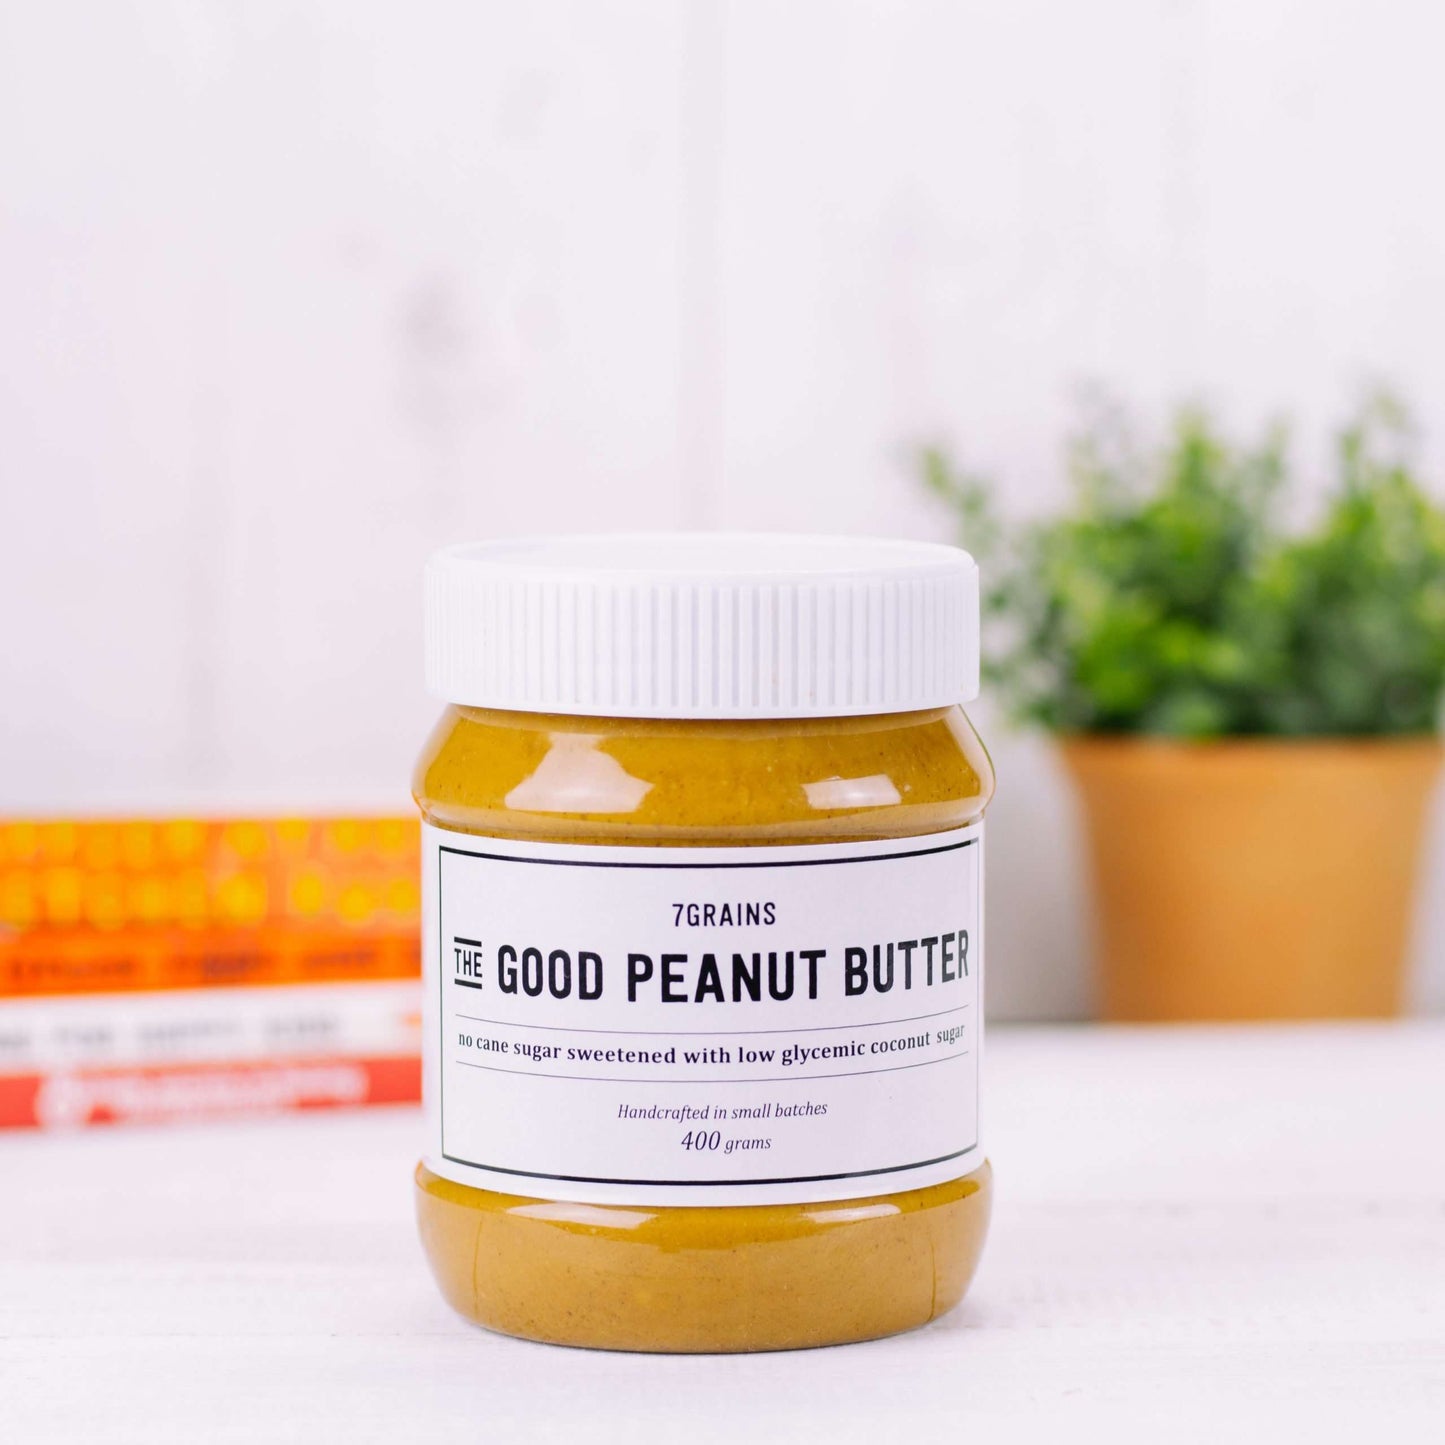 The Good Peanut Butter